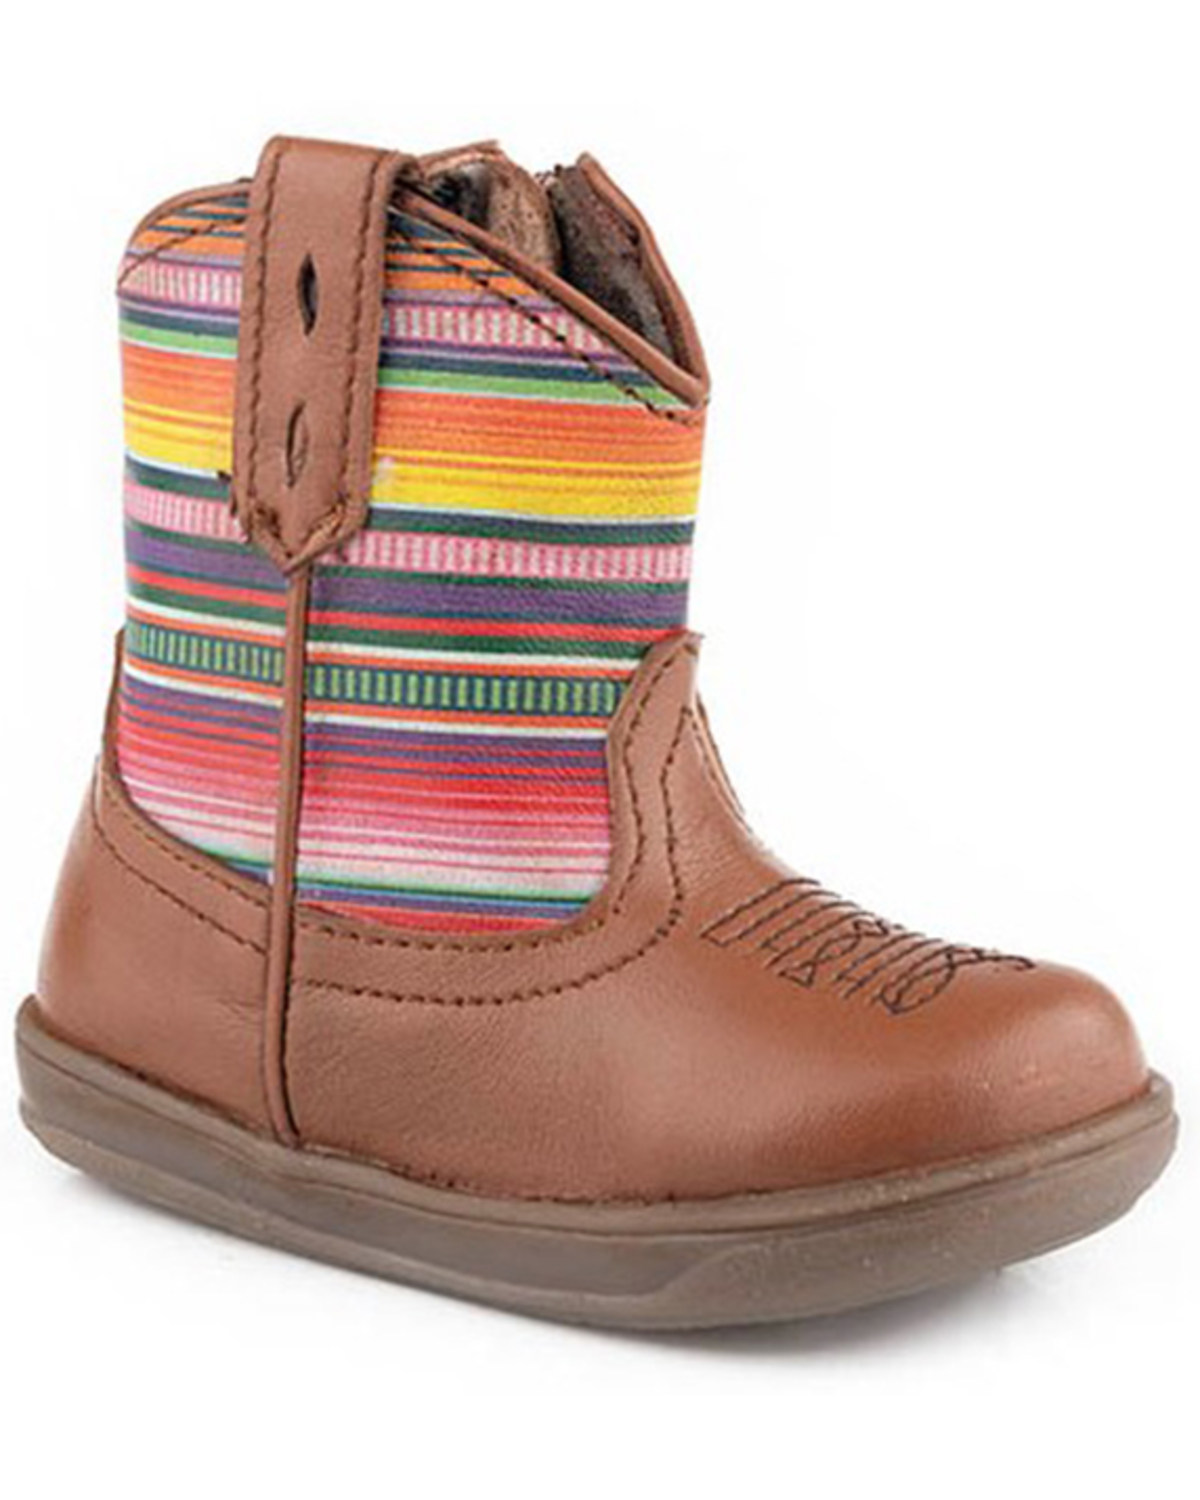 Roper Infant Girls' Cora Serape Western Boots - Round Toe